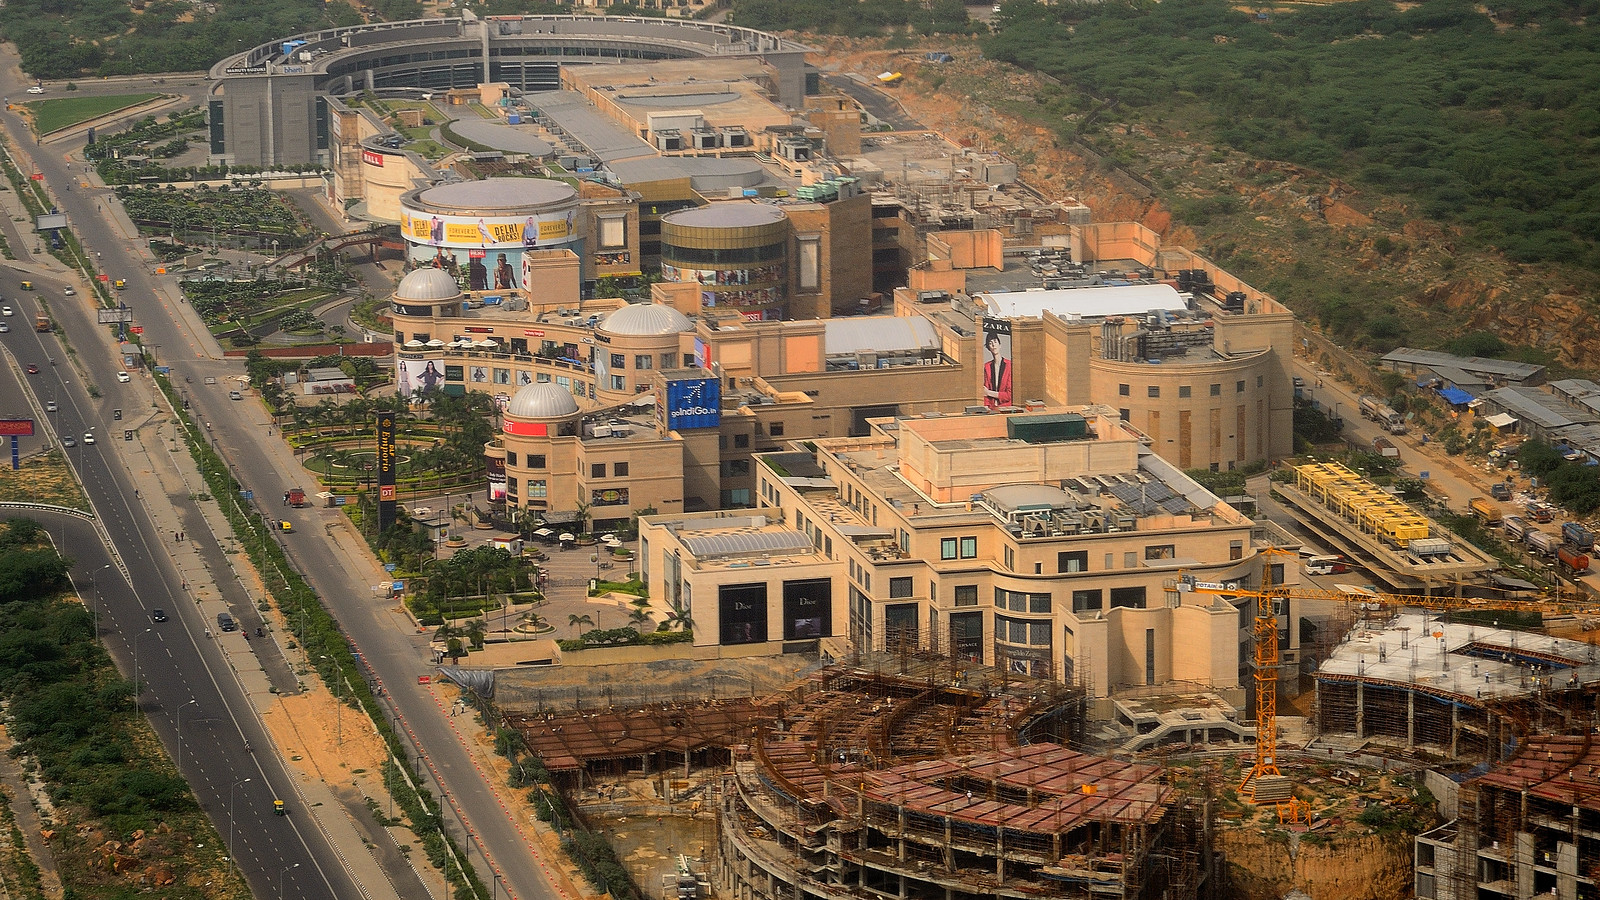 Under-Construction Mall (DLF Emporio), A mall under constru…